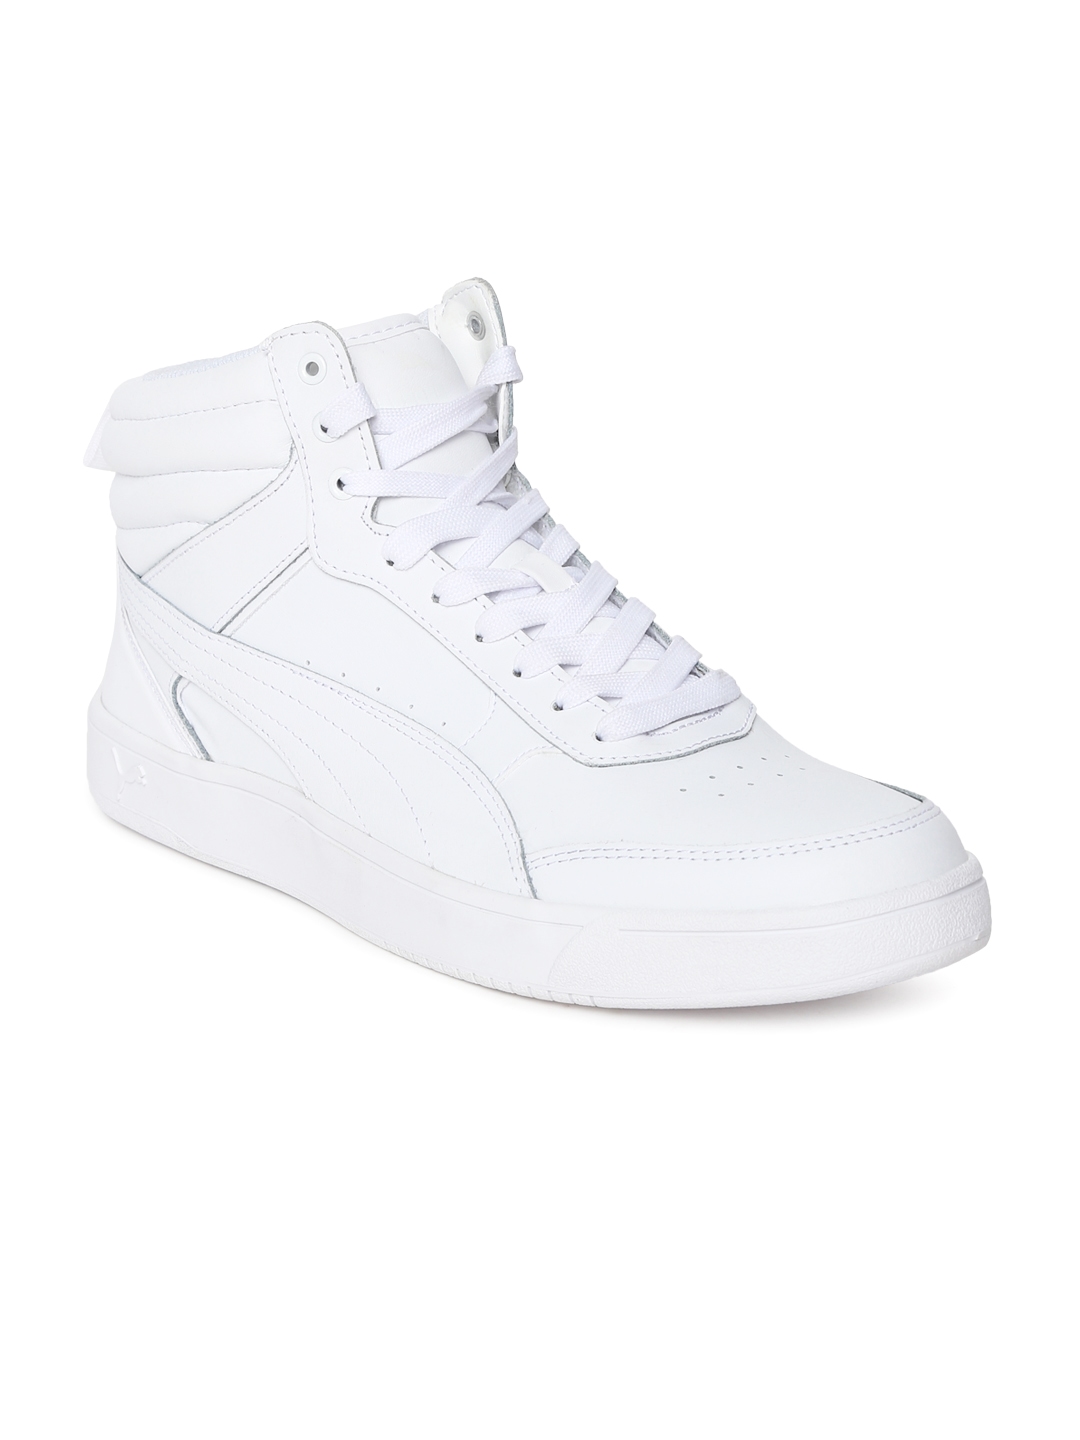 puma men white shoes